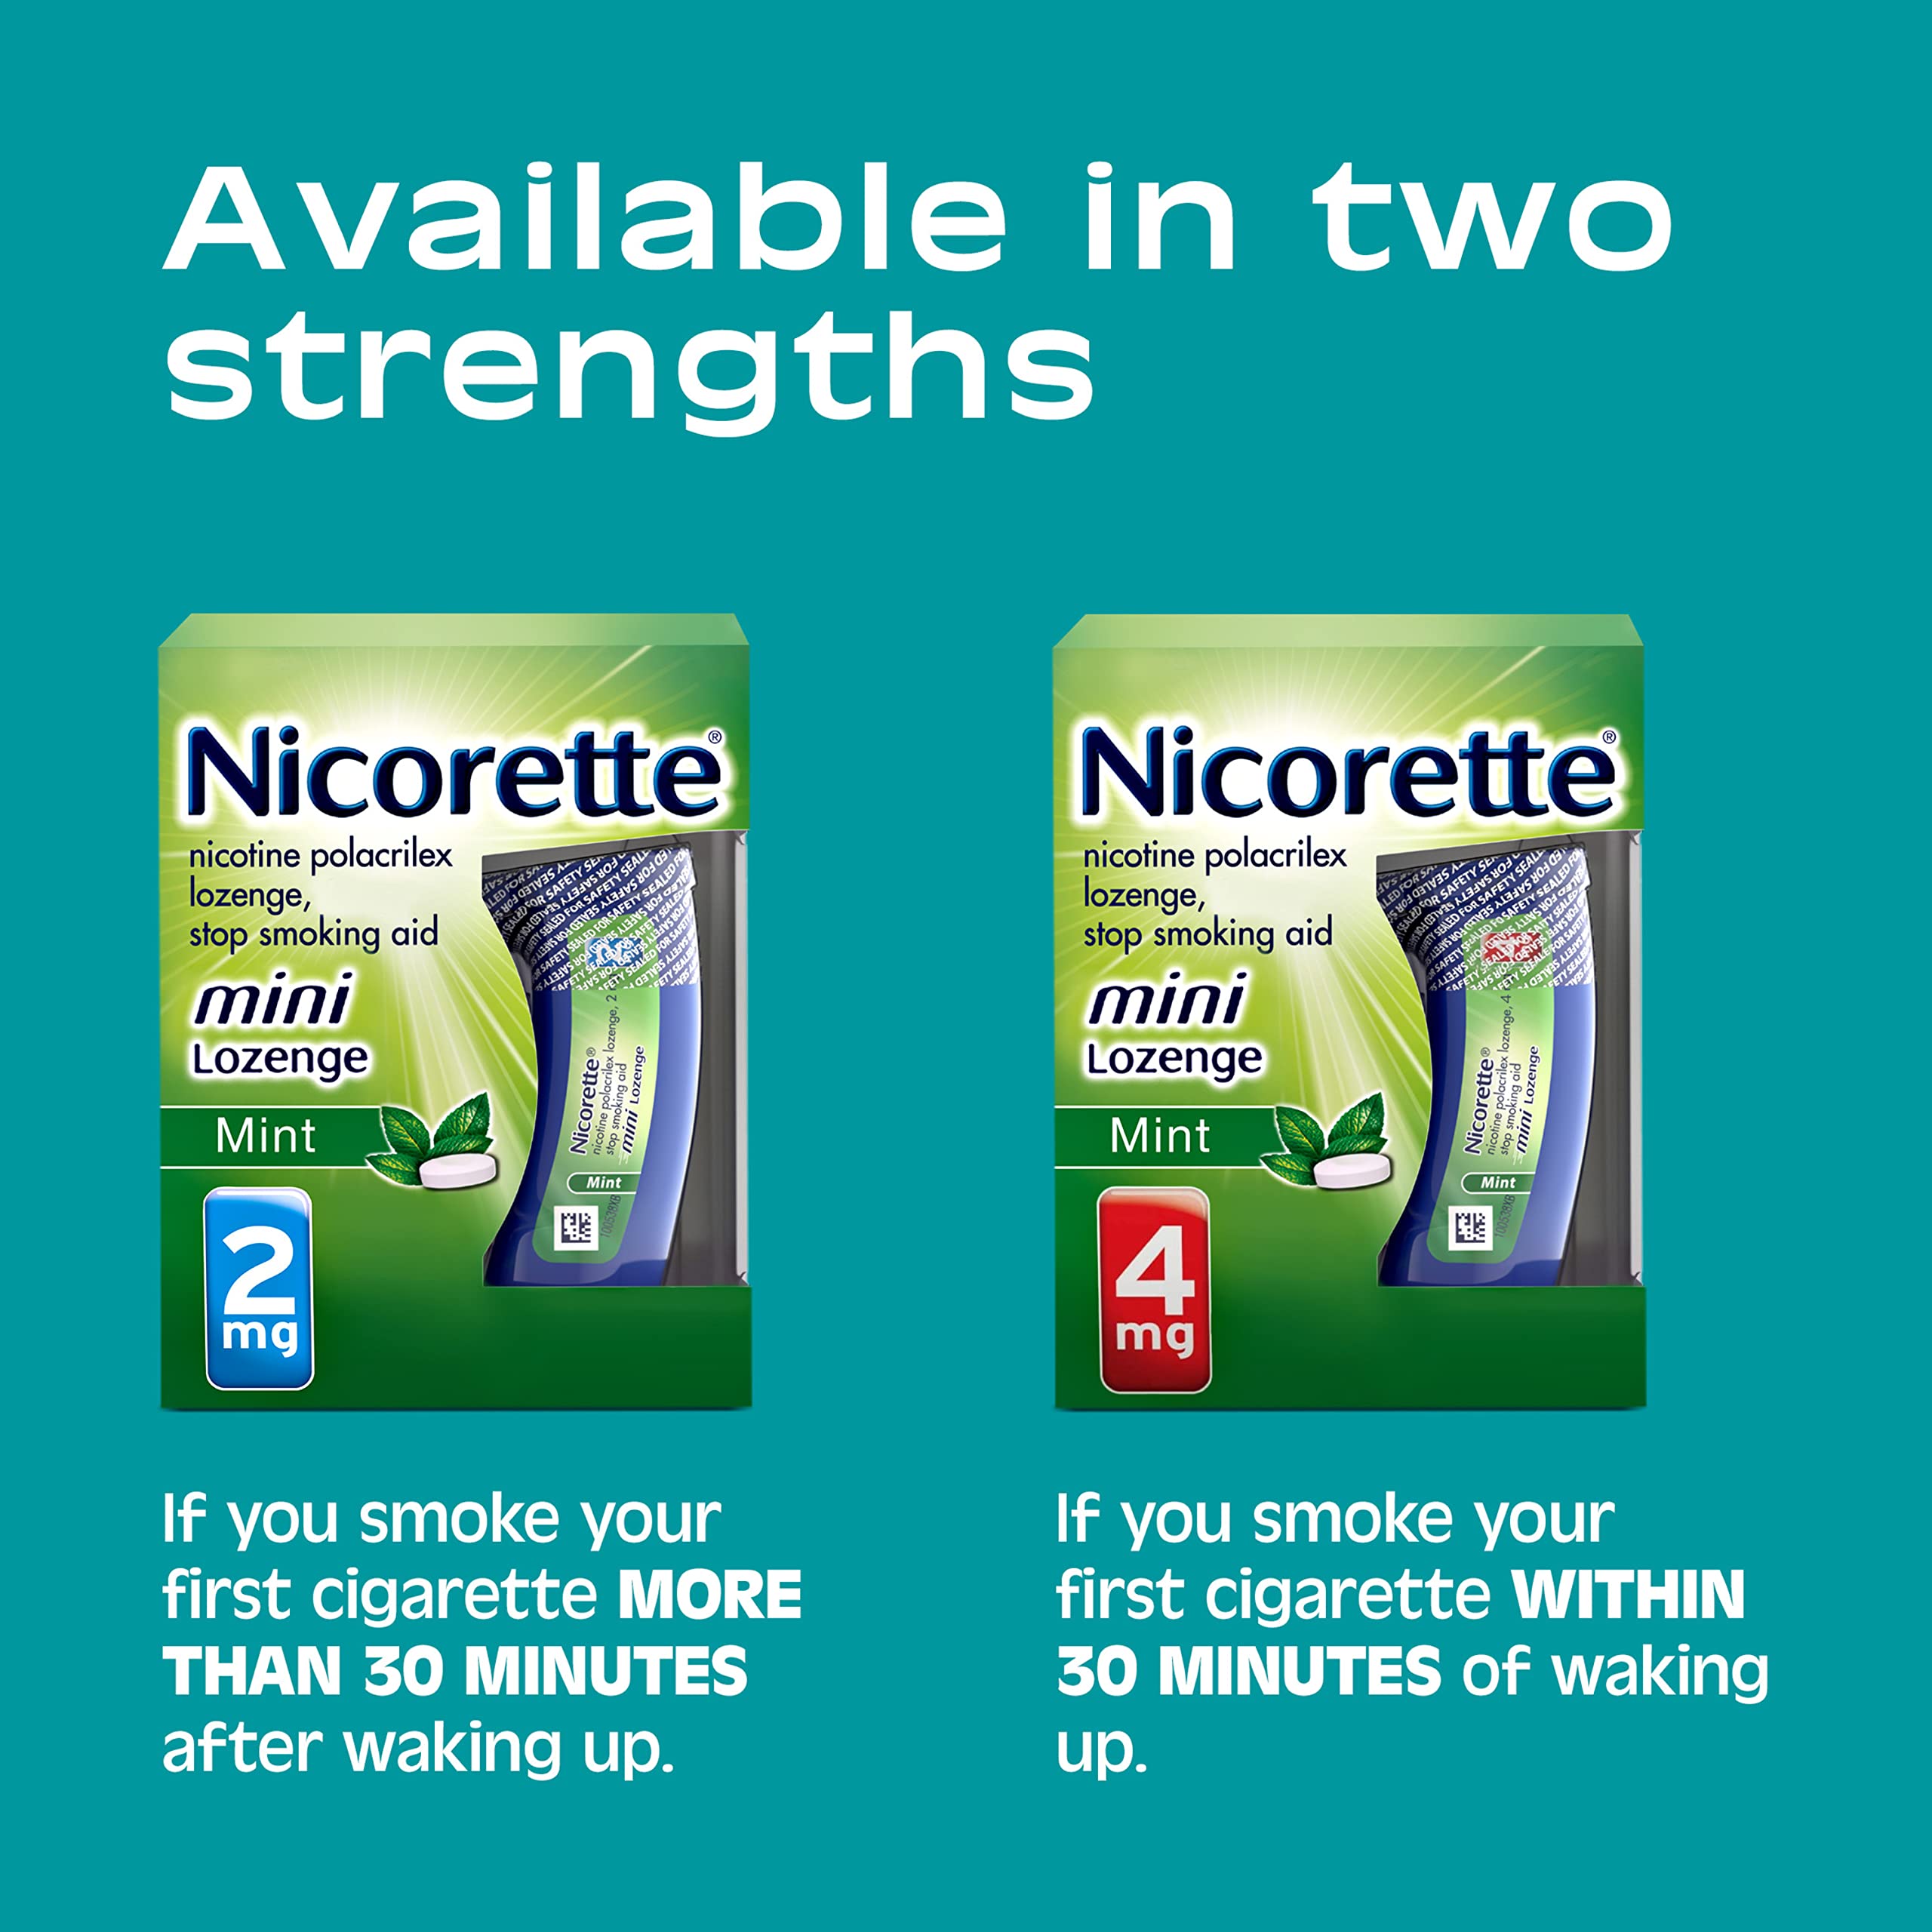 Nicorette 2 mg Mini Nicotine Lozenges to Help Quit Smoking - Mint Flavor Stop Smoking Aid, 20 Count